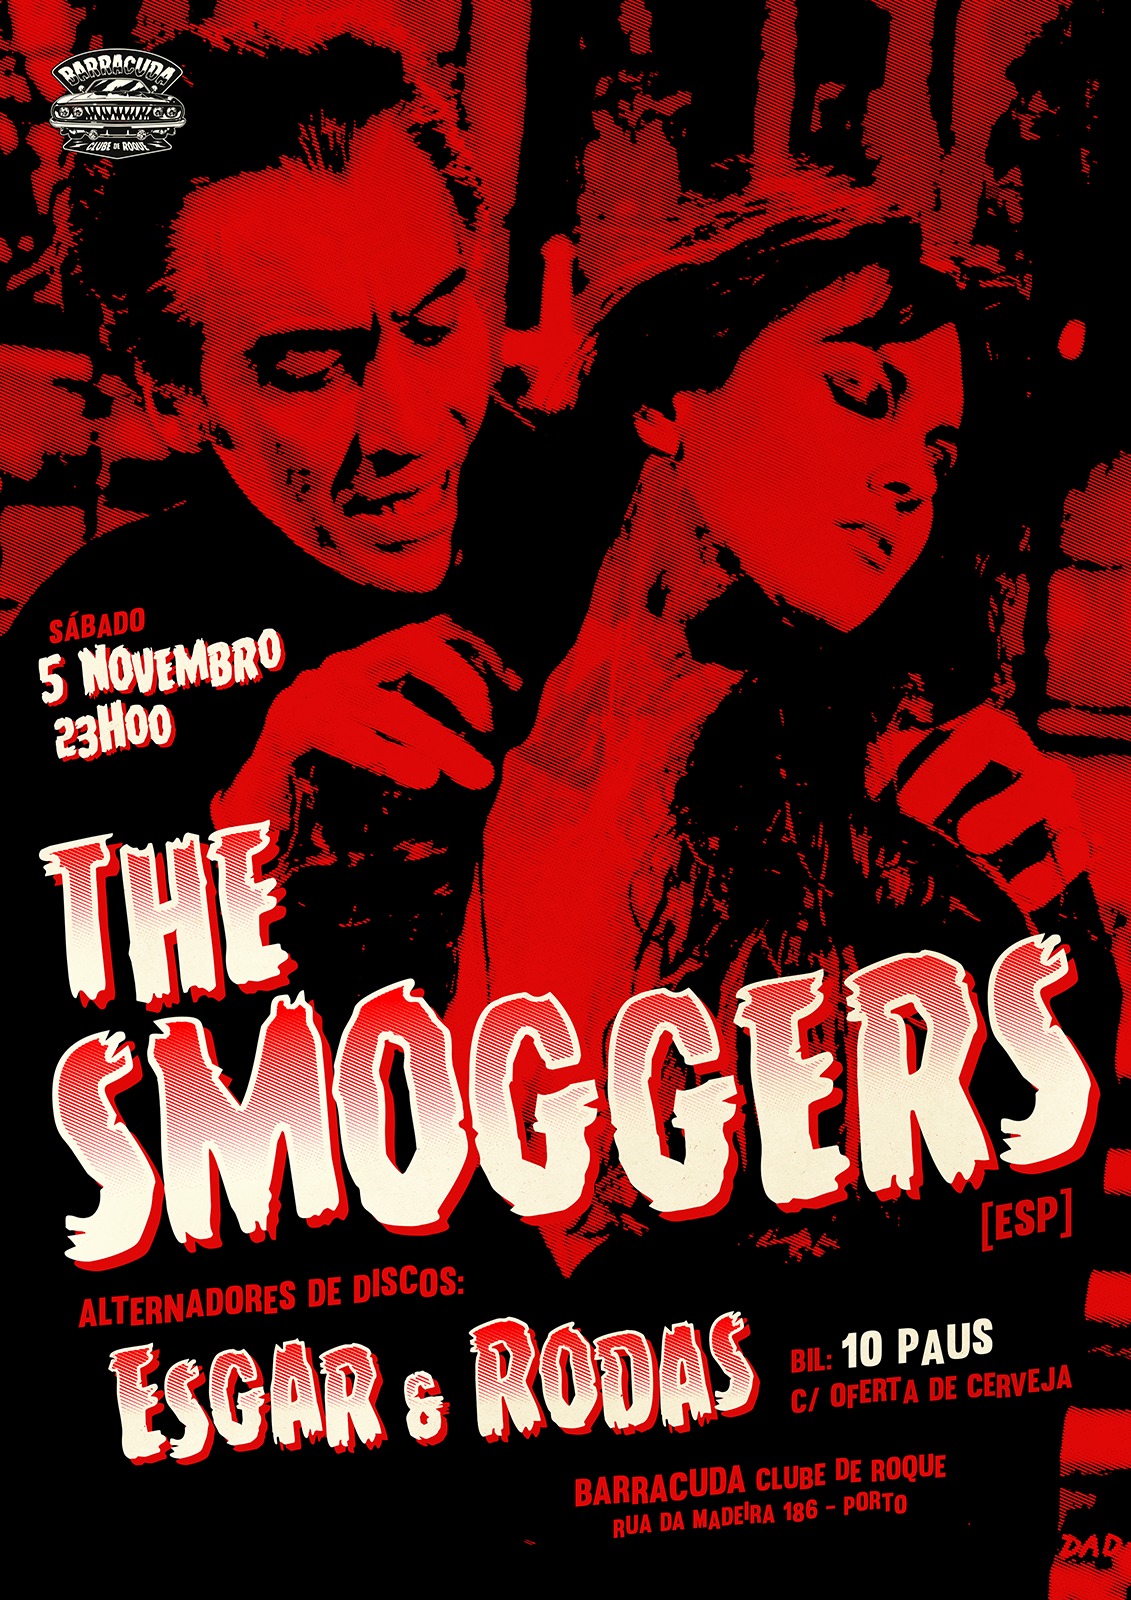 The Smoggers (esp) - Alternadores de discos Esgar & Rodas Barracuda - Clube de Roque